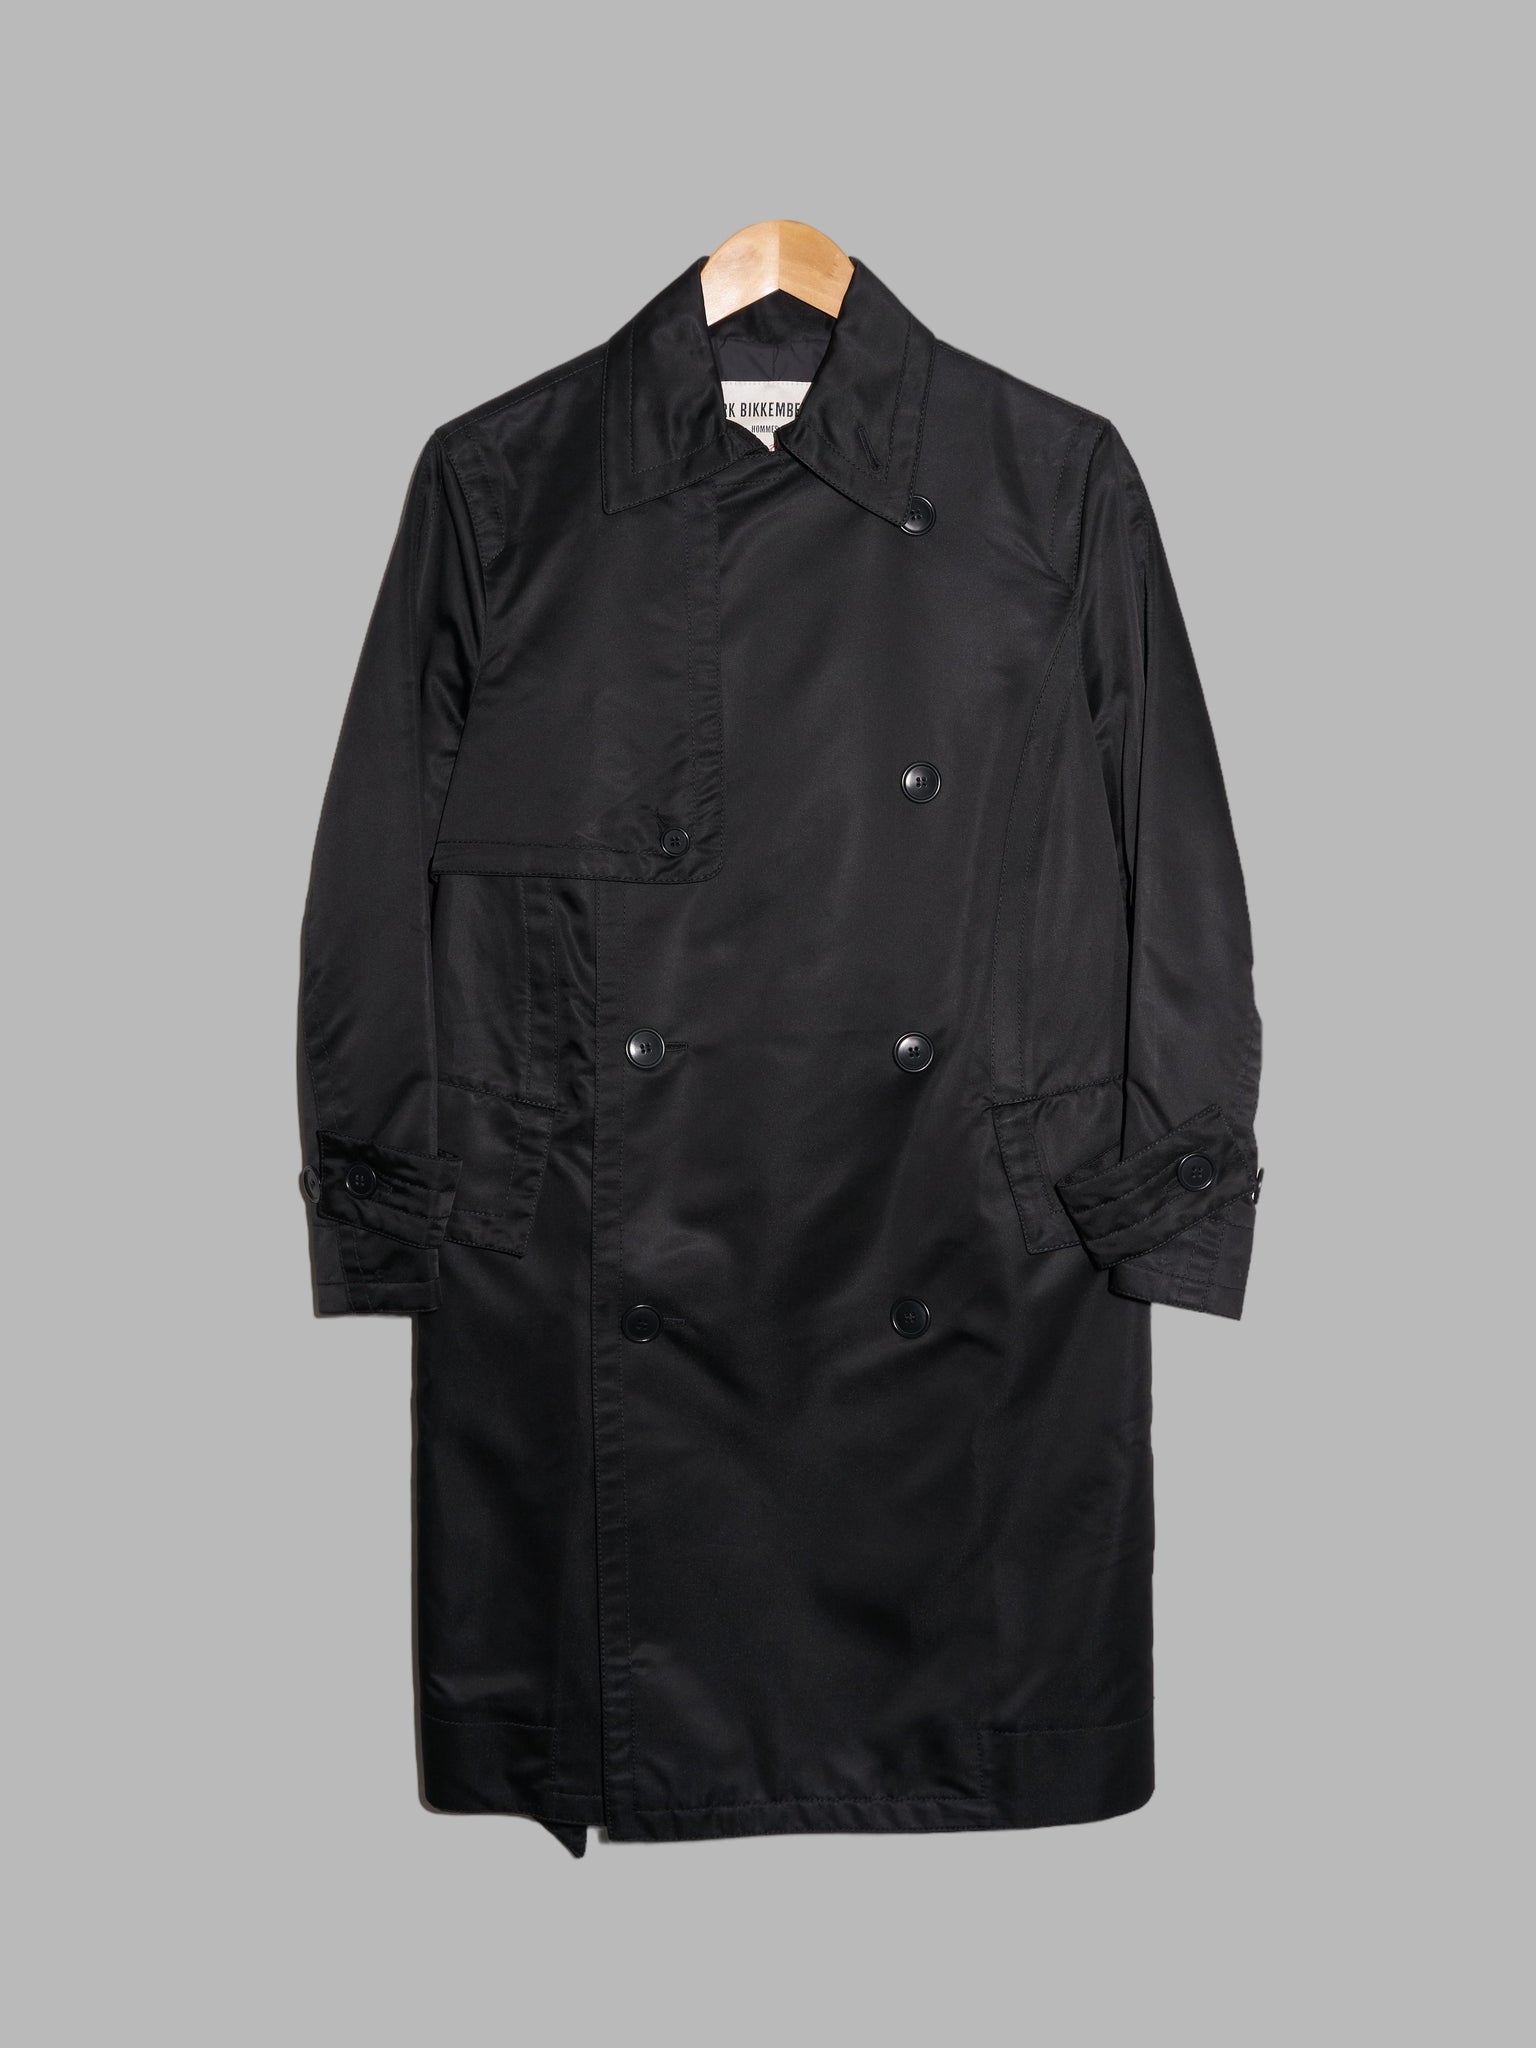 Dirk Bikkembergs Hommes Pour La Femme 1990s black satin trench coat